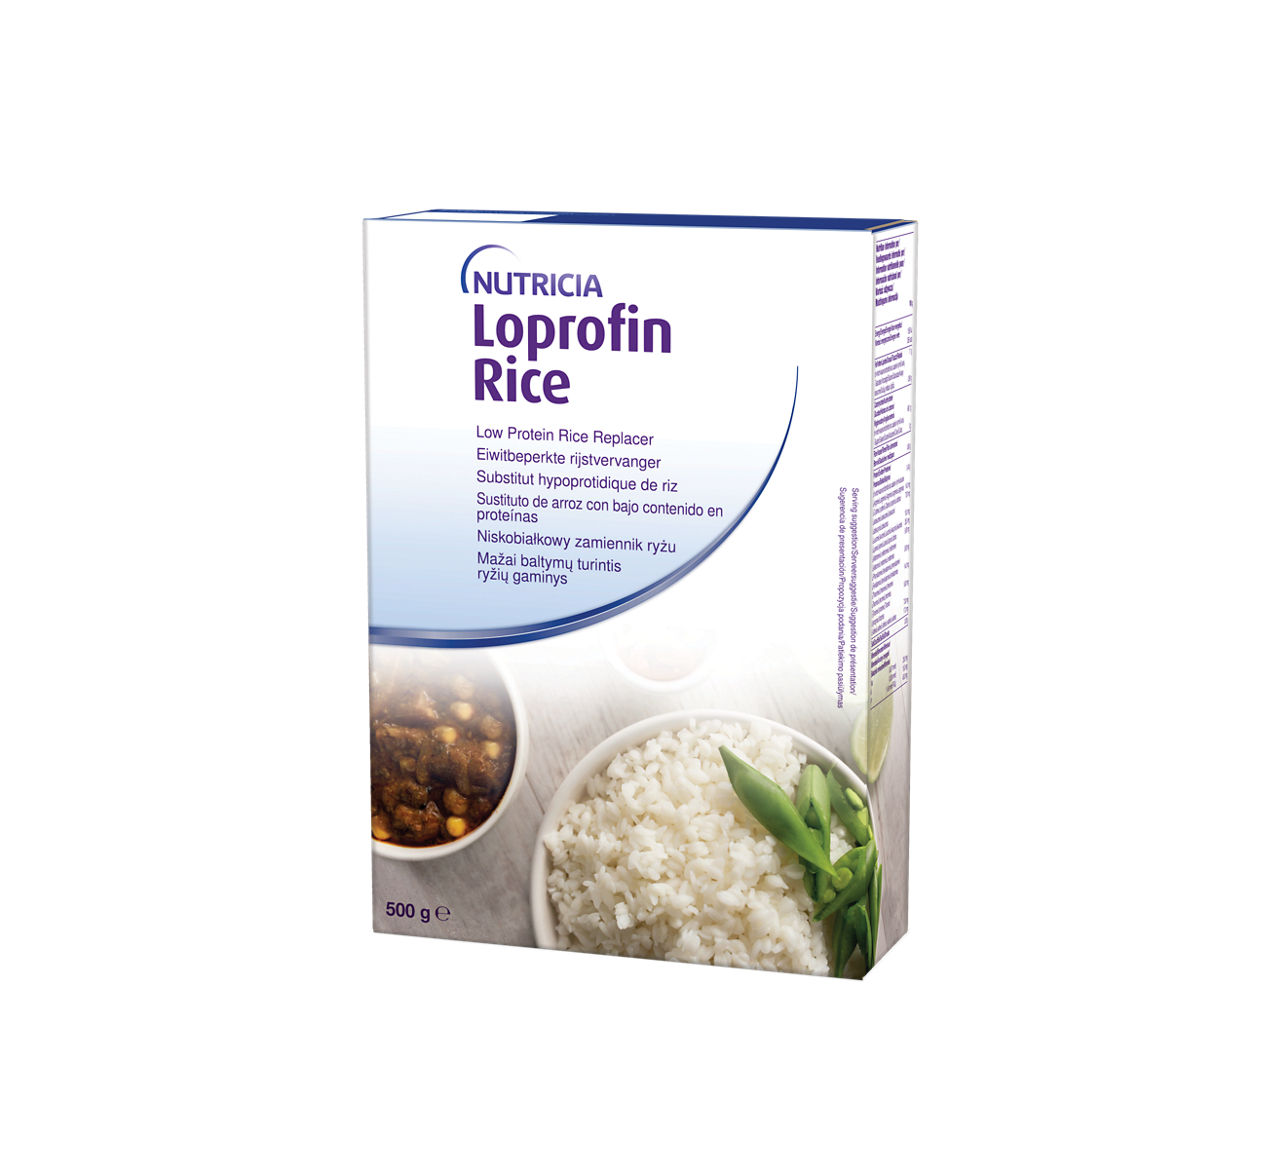 en-GB,Loprofin Rice